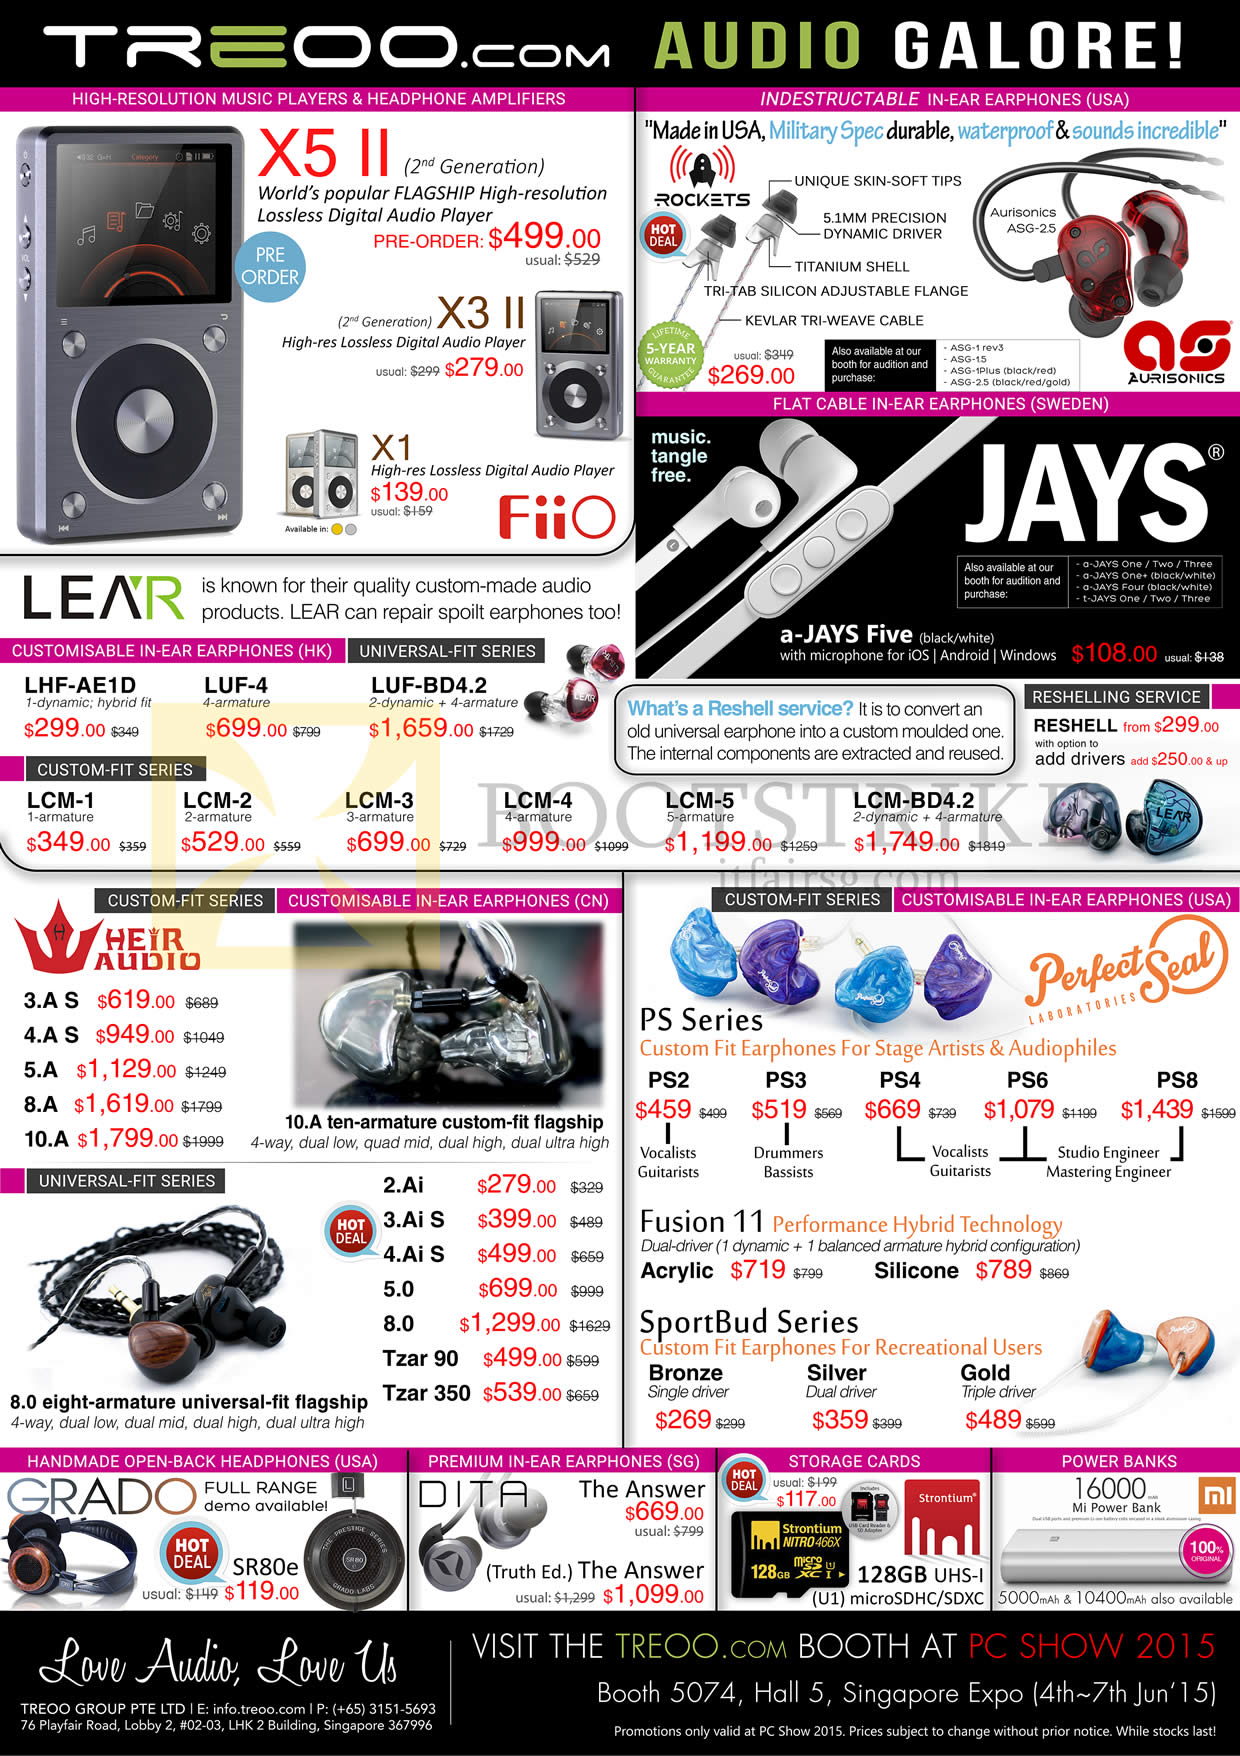 PC SHOW 2015 price list image brochure of Treoo Digital Audio Players FiiO, Jays, X5 II, X3 II, X1, Jays, Lear, Heir Audio, Grado, Dita